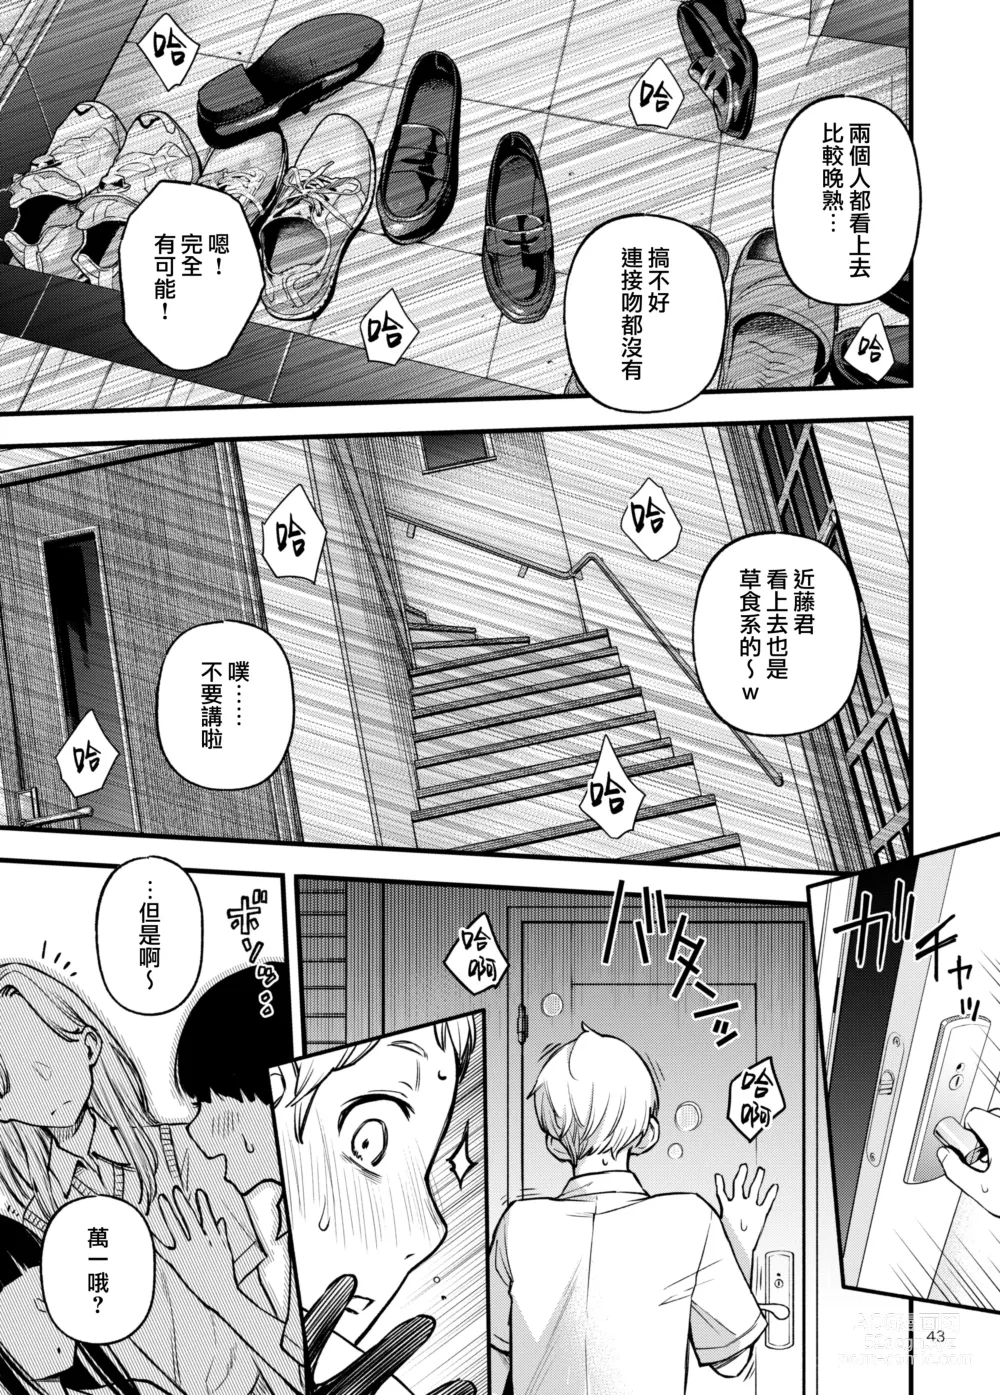 Page 44 of doujinshi 与处男初体验时觉醒的处女 2 #1-4